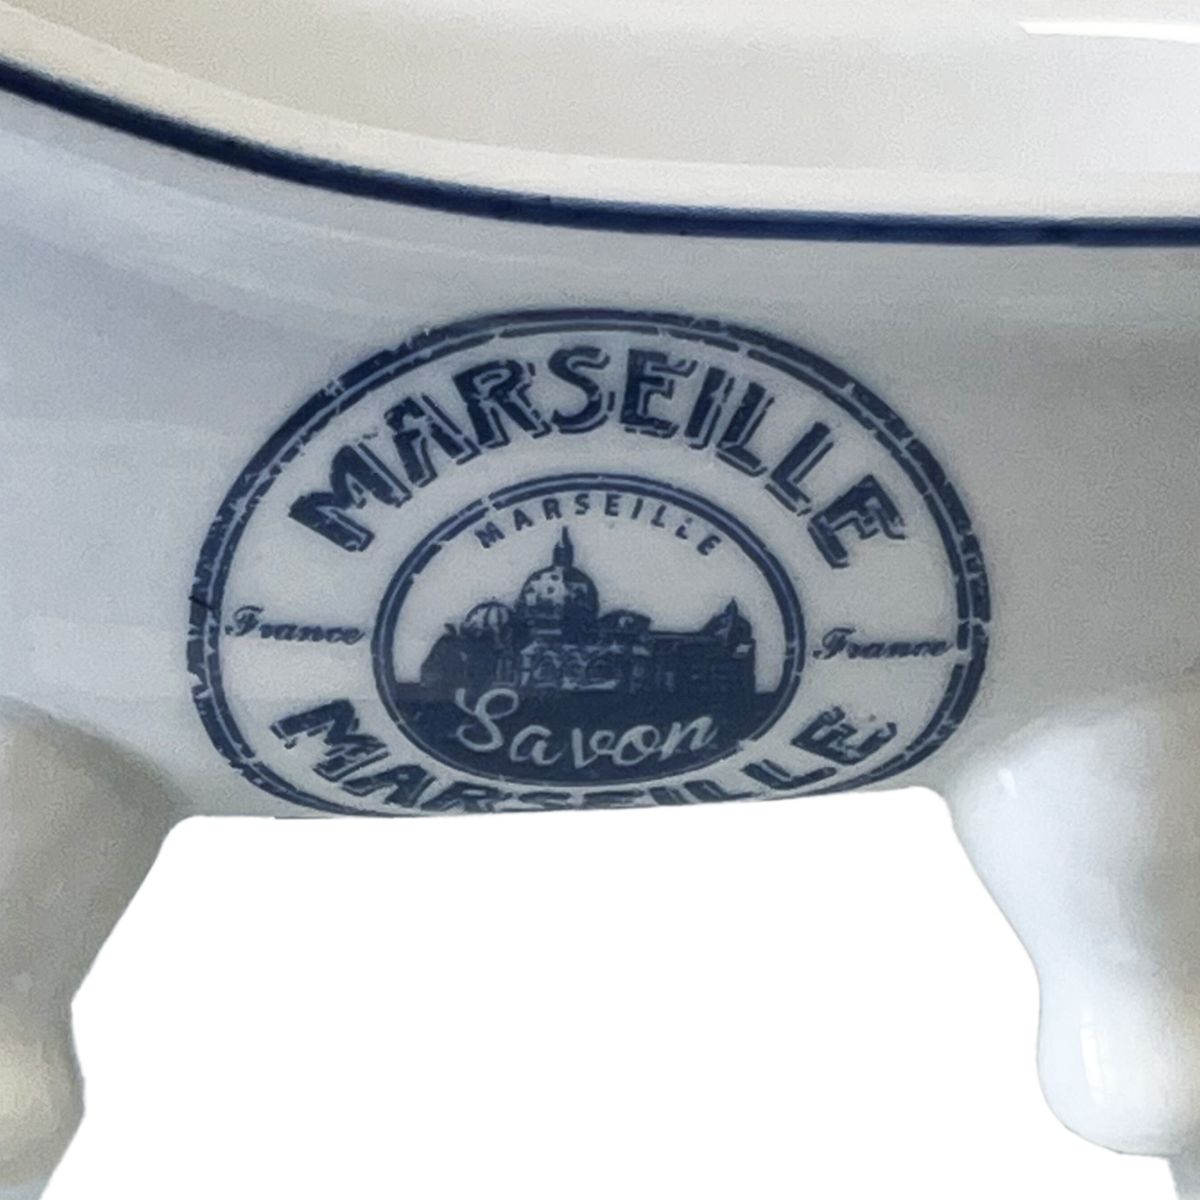 Savon de Marseille bath soap dish